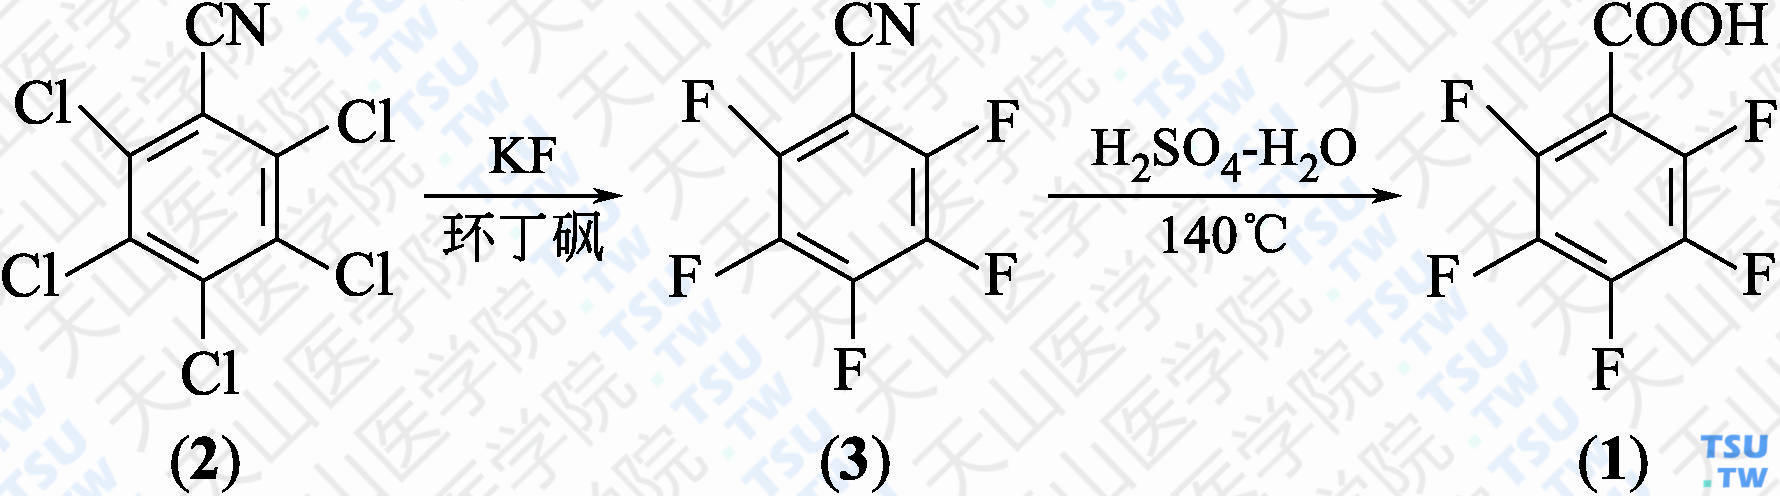 2，3，4，5，6-五氟苯甲酸（分子式：C<sub>7</sub>HF<sub>5</sub>O<sub>2</sub>）的合成方法路线及其结构式